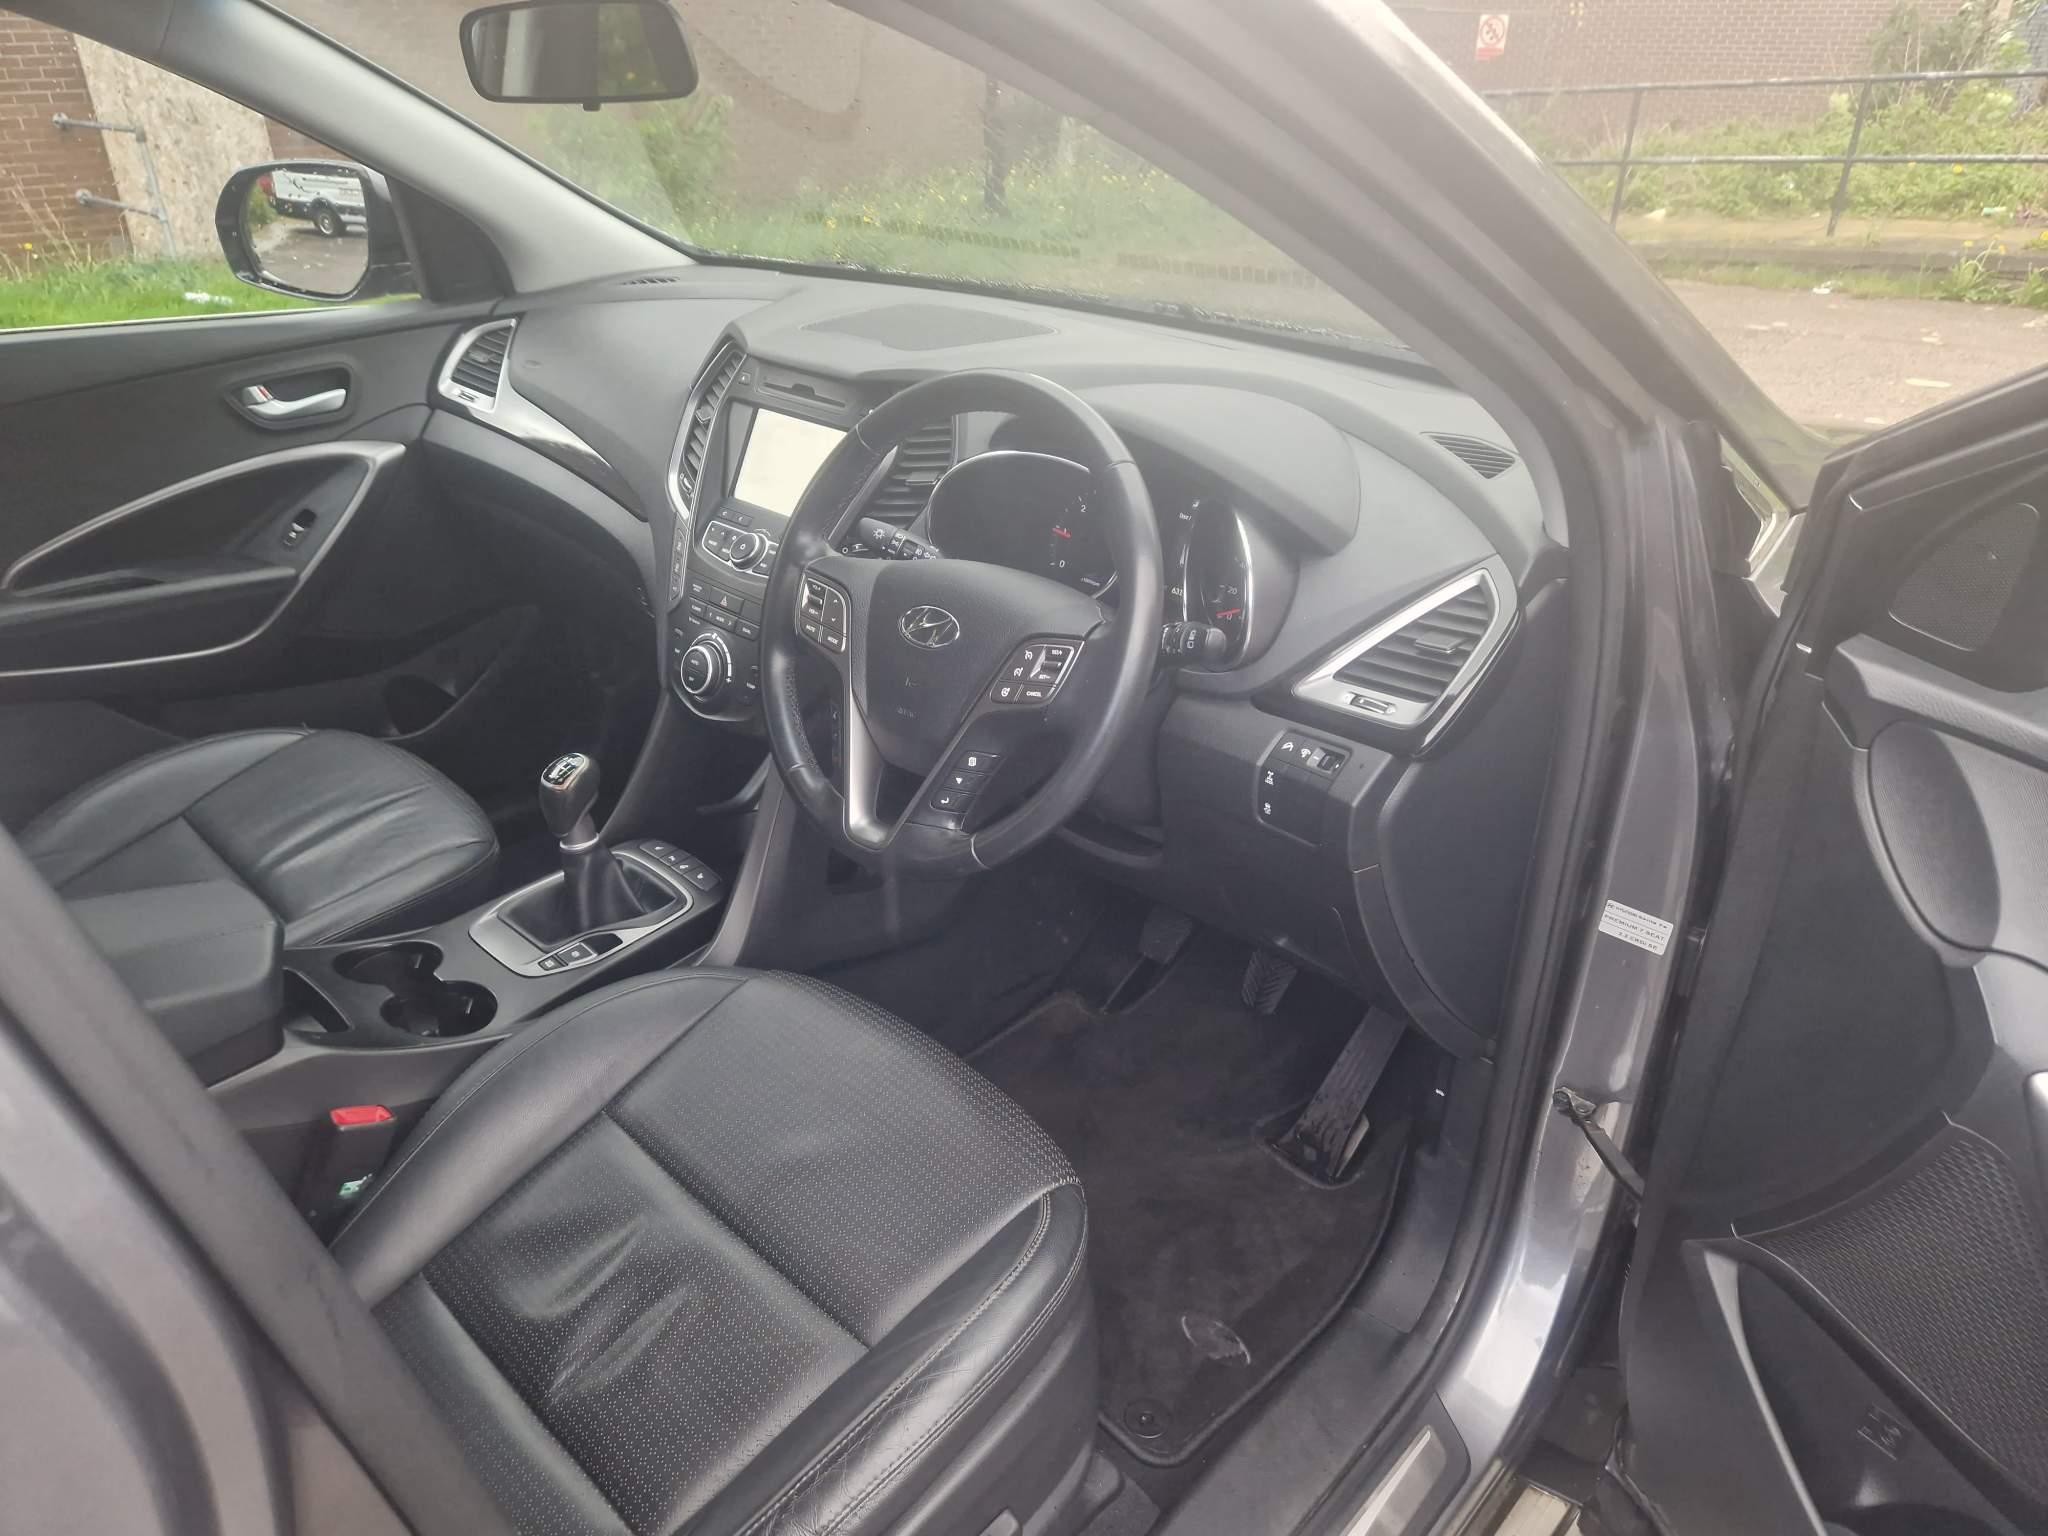 Hyundai SANTA FE 2.2 CRDi Premium SE 4WD Euro 5 5dr (7 seat) (SW14TFN) image 9